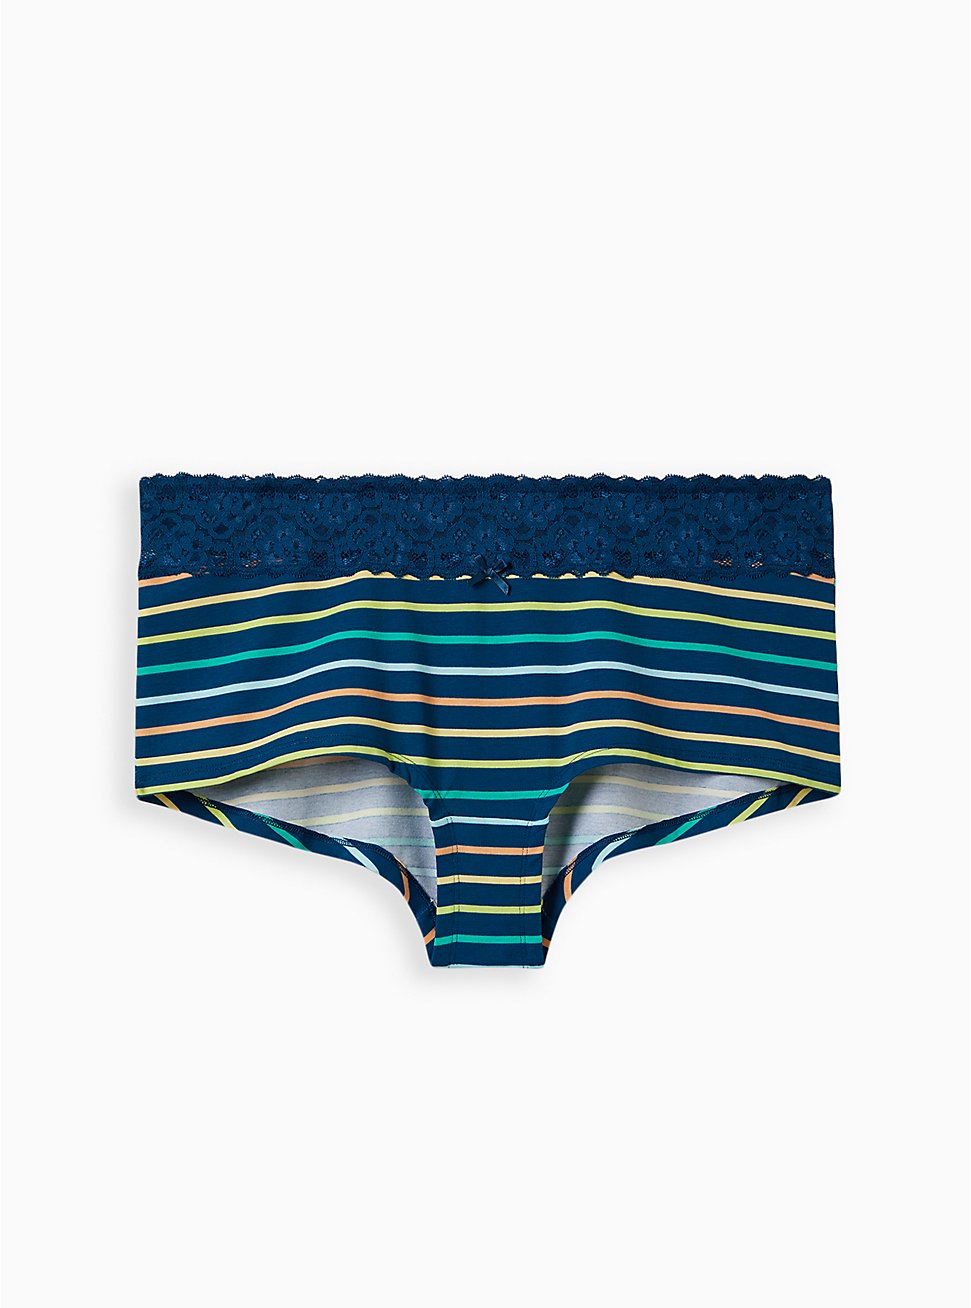 Wide Lace Trim Boyshort Panty - Cotton Striped Blue, PERFECT STRIPE, hi-res